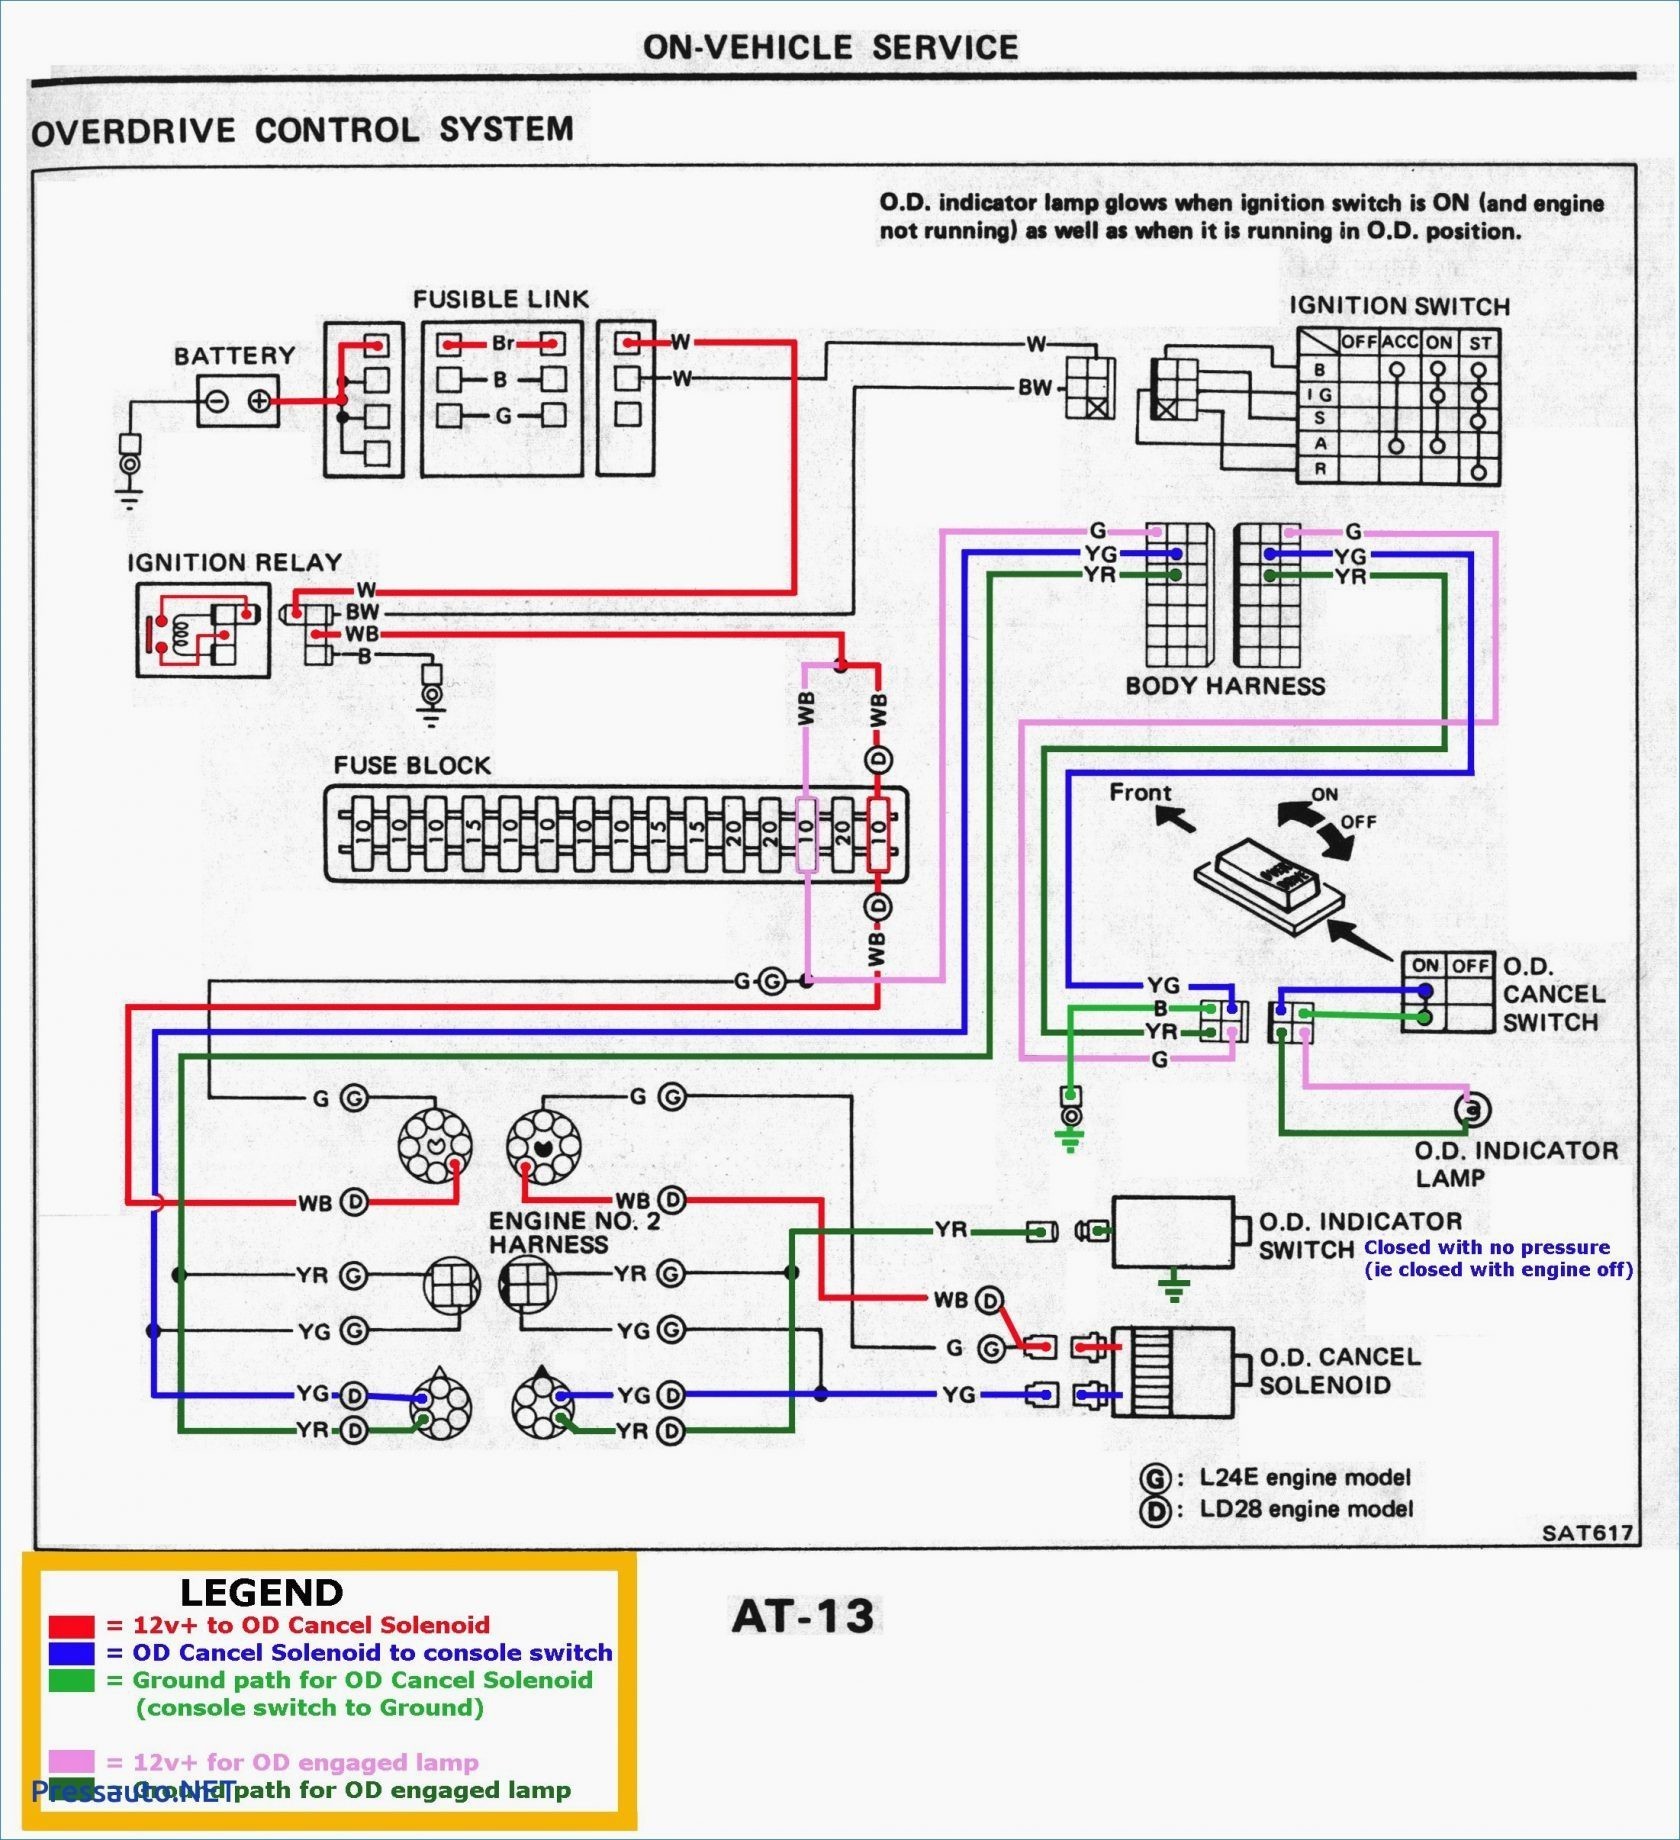 Square D Load Center Wiring Diagram Micro Sprint Wiring Diagram Wiring Diagram Datasource Of Square D Load Center Wiring Diagram